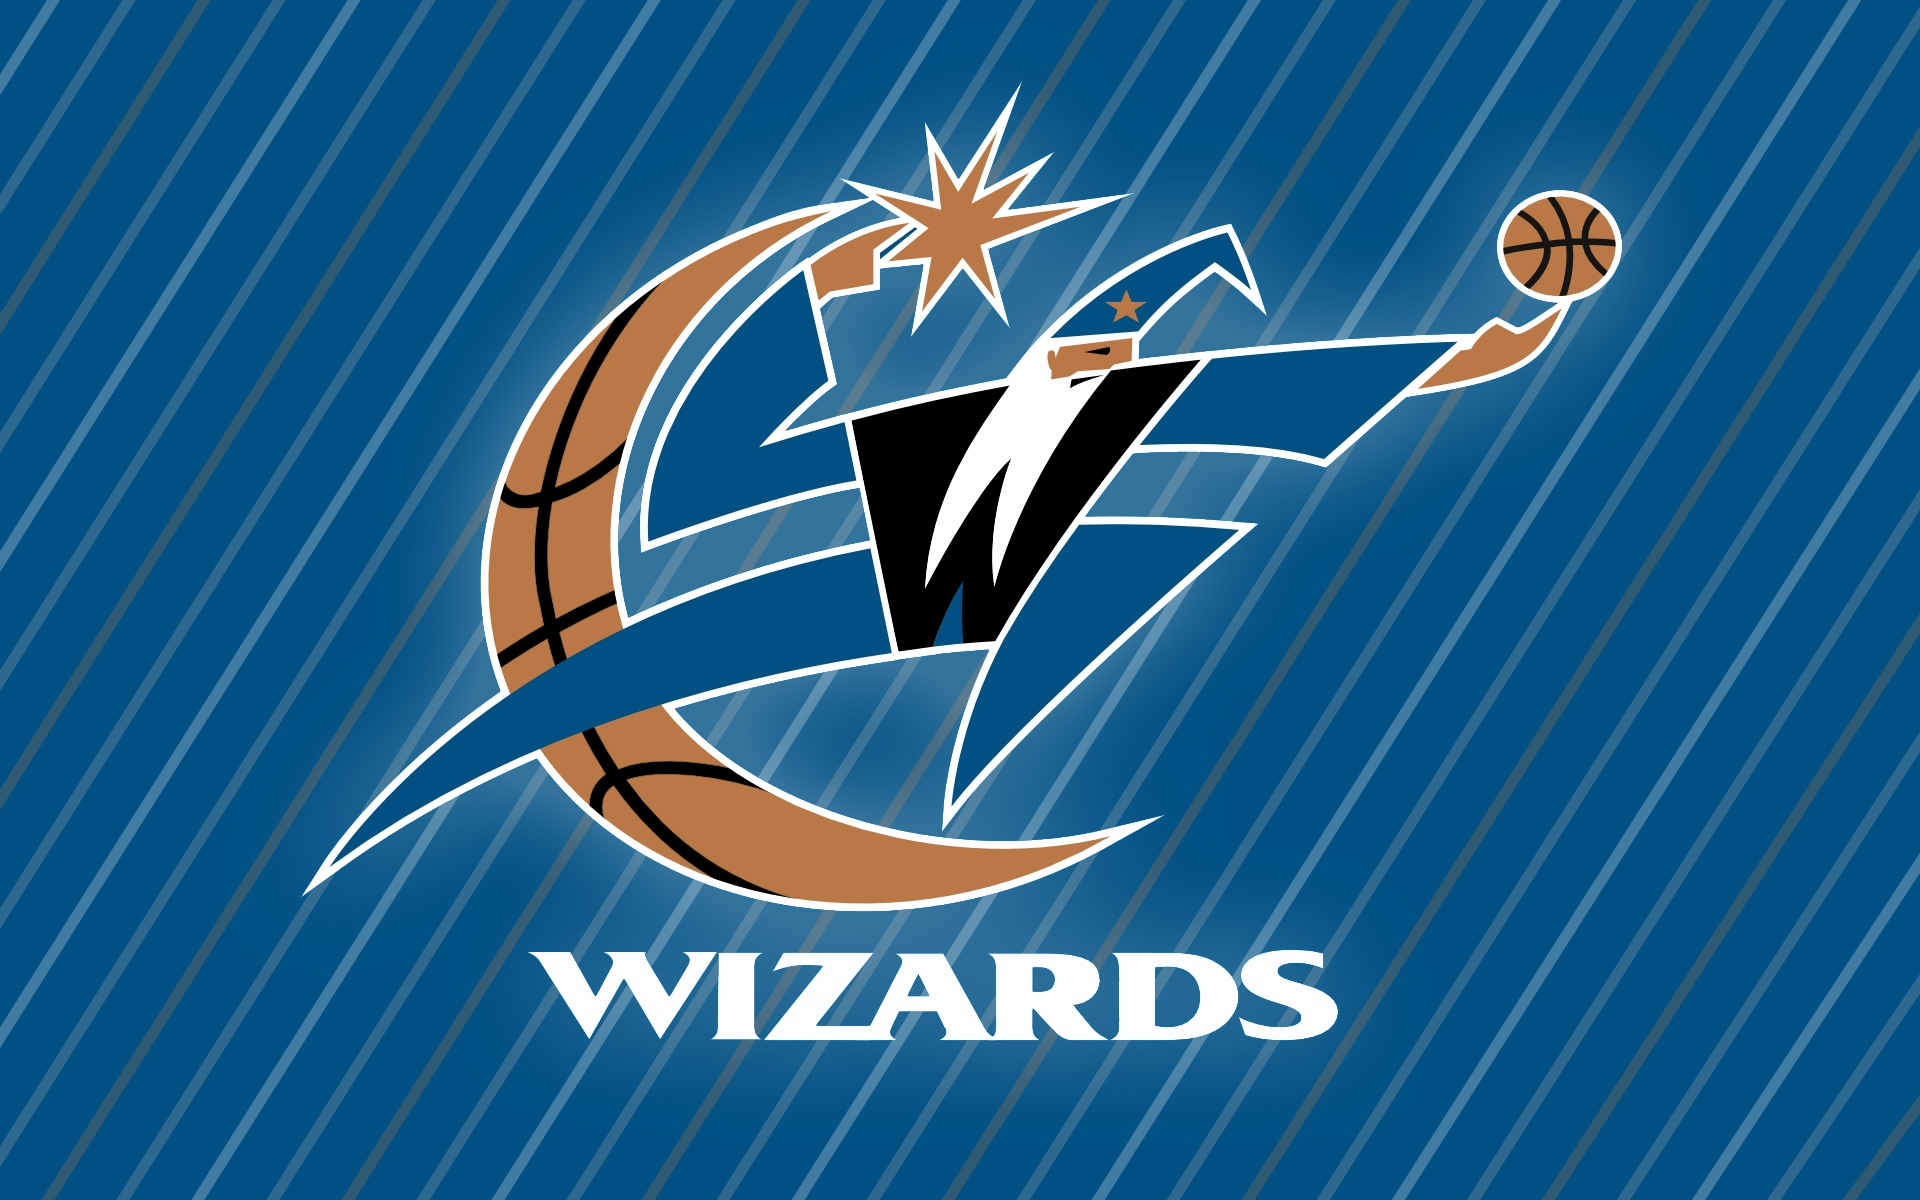 Washington Wizards scores